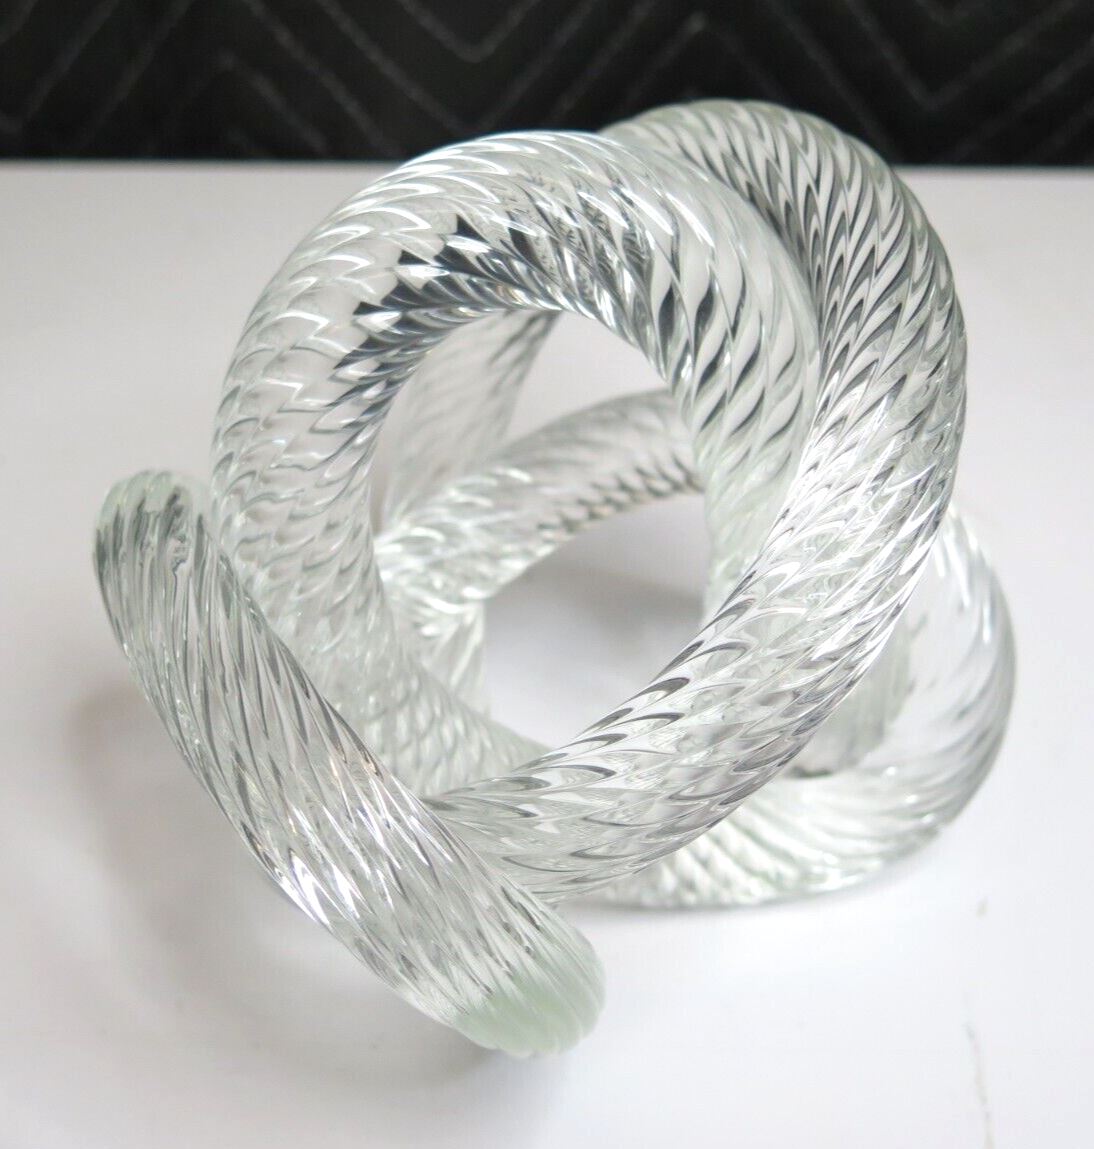 Mid-century Italian Blown Glass Signed Zanetti Twisted Rope Knot - 6" x 6"